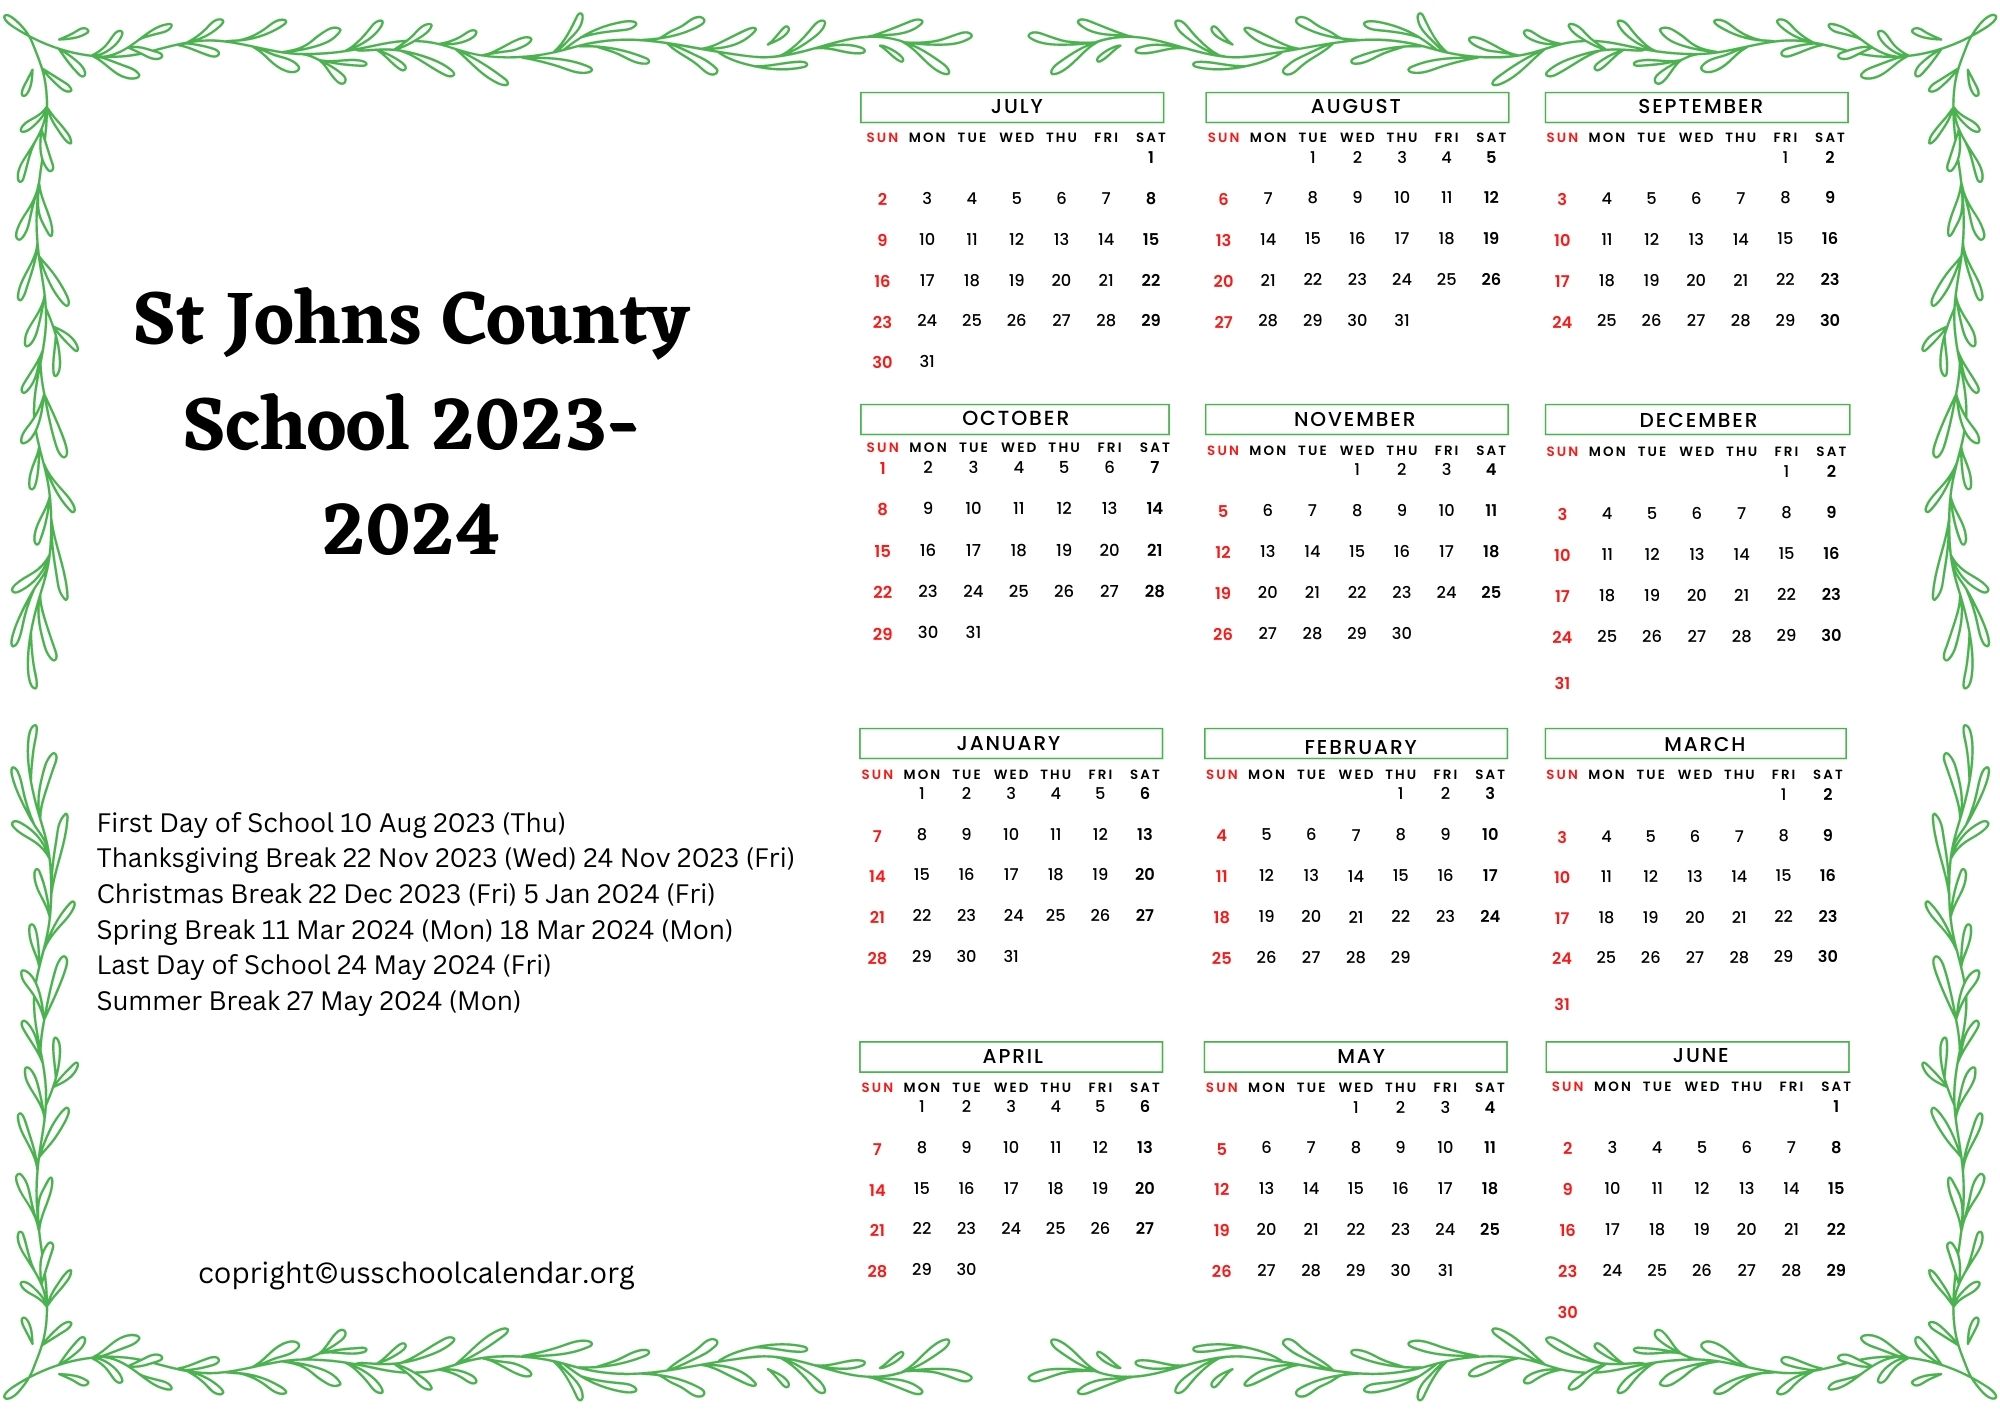 St Johns County School Calendar with Holidays 2023 2024